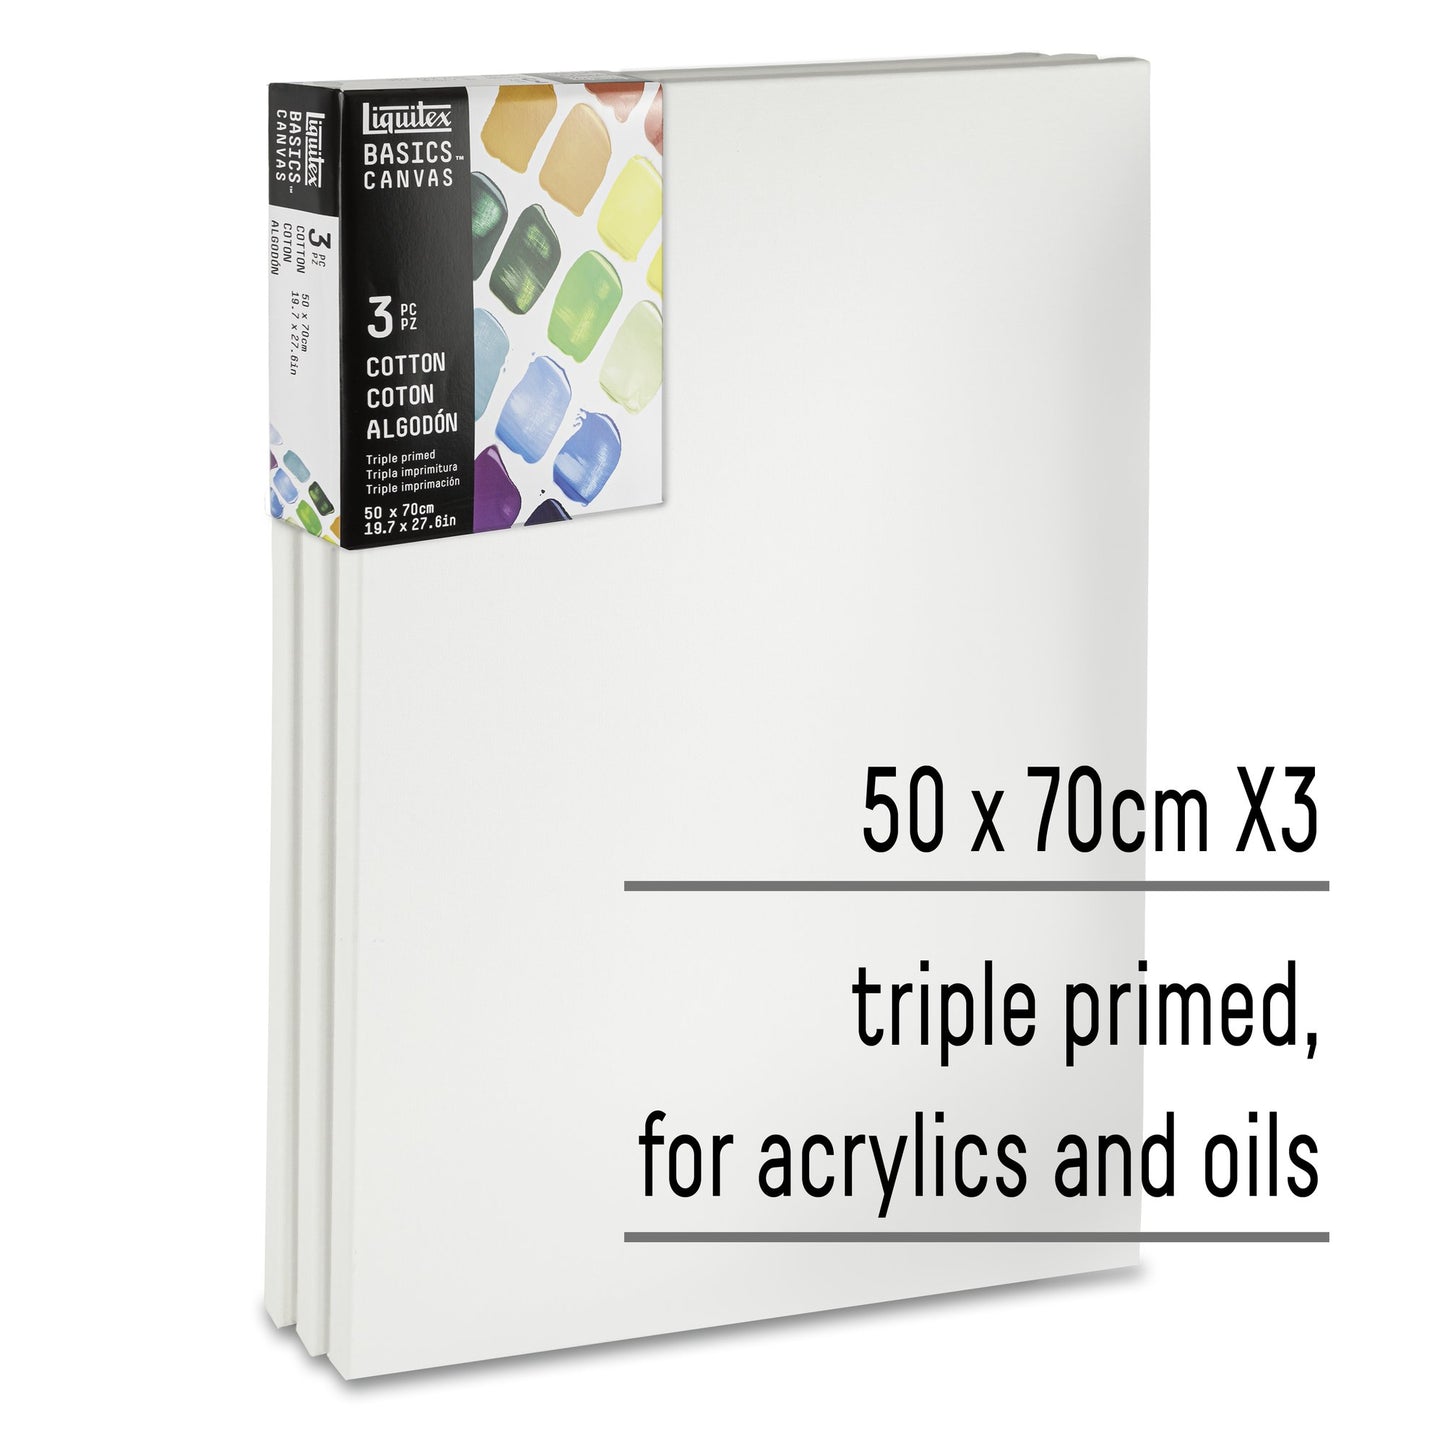 Liquitex Basics Set Of 3 Cotton Canvas 50x70cm